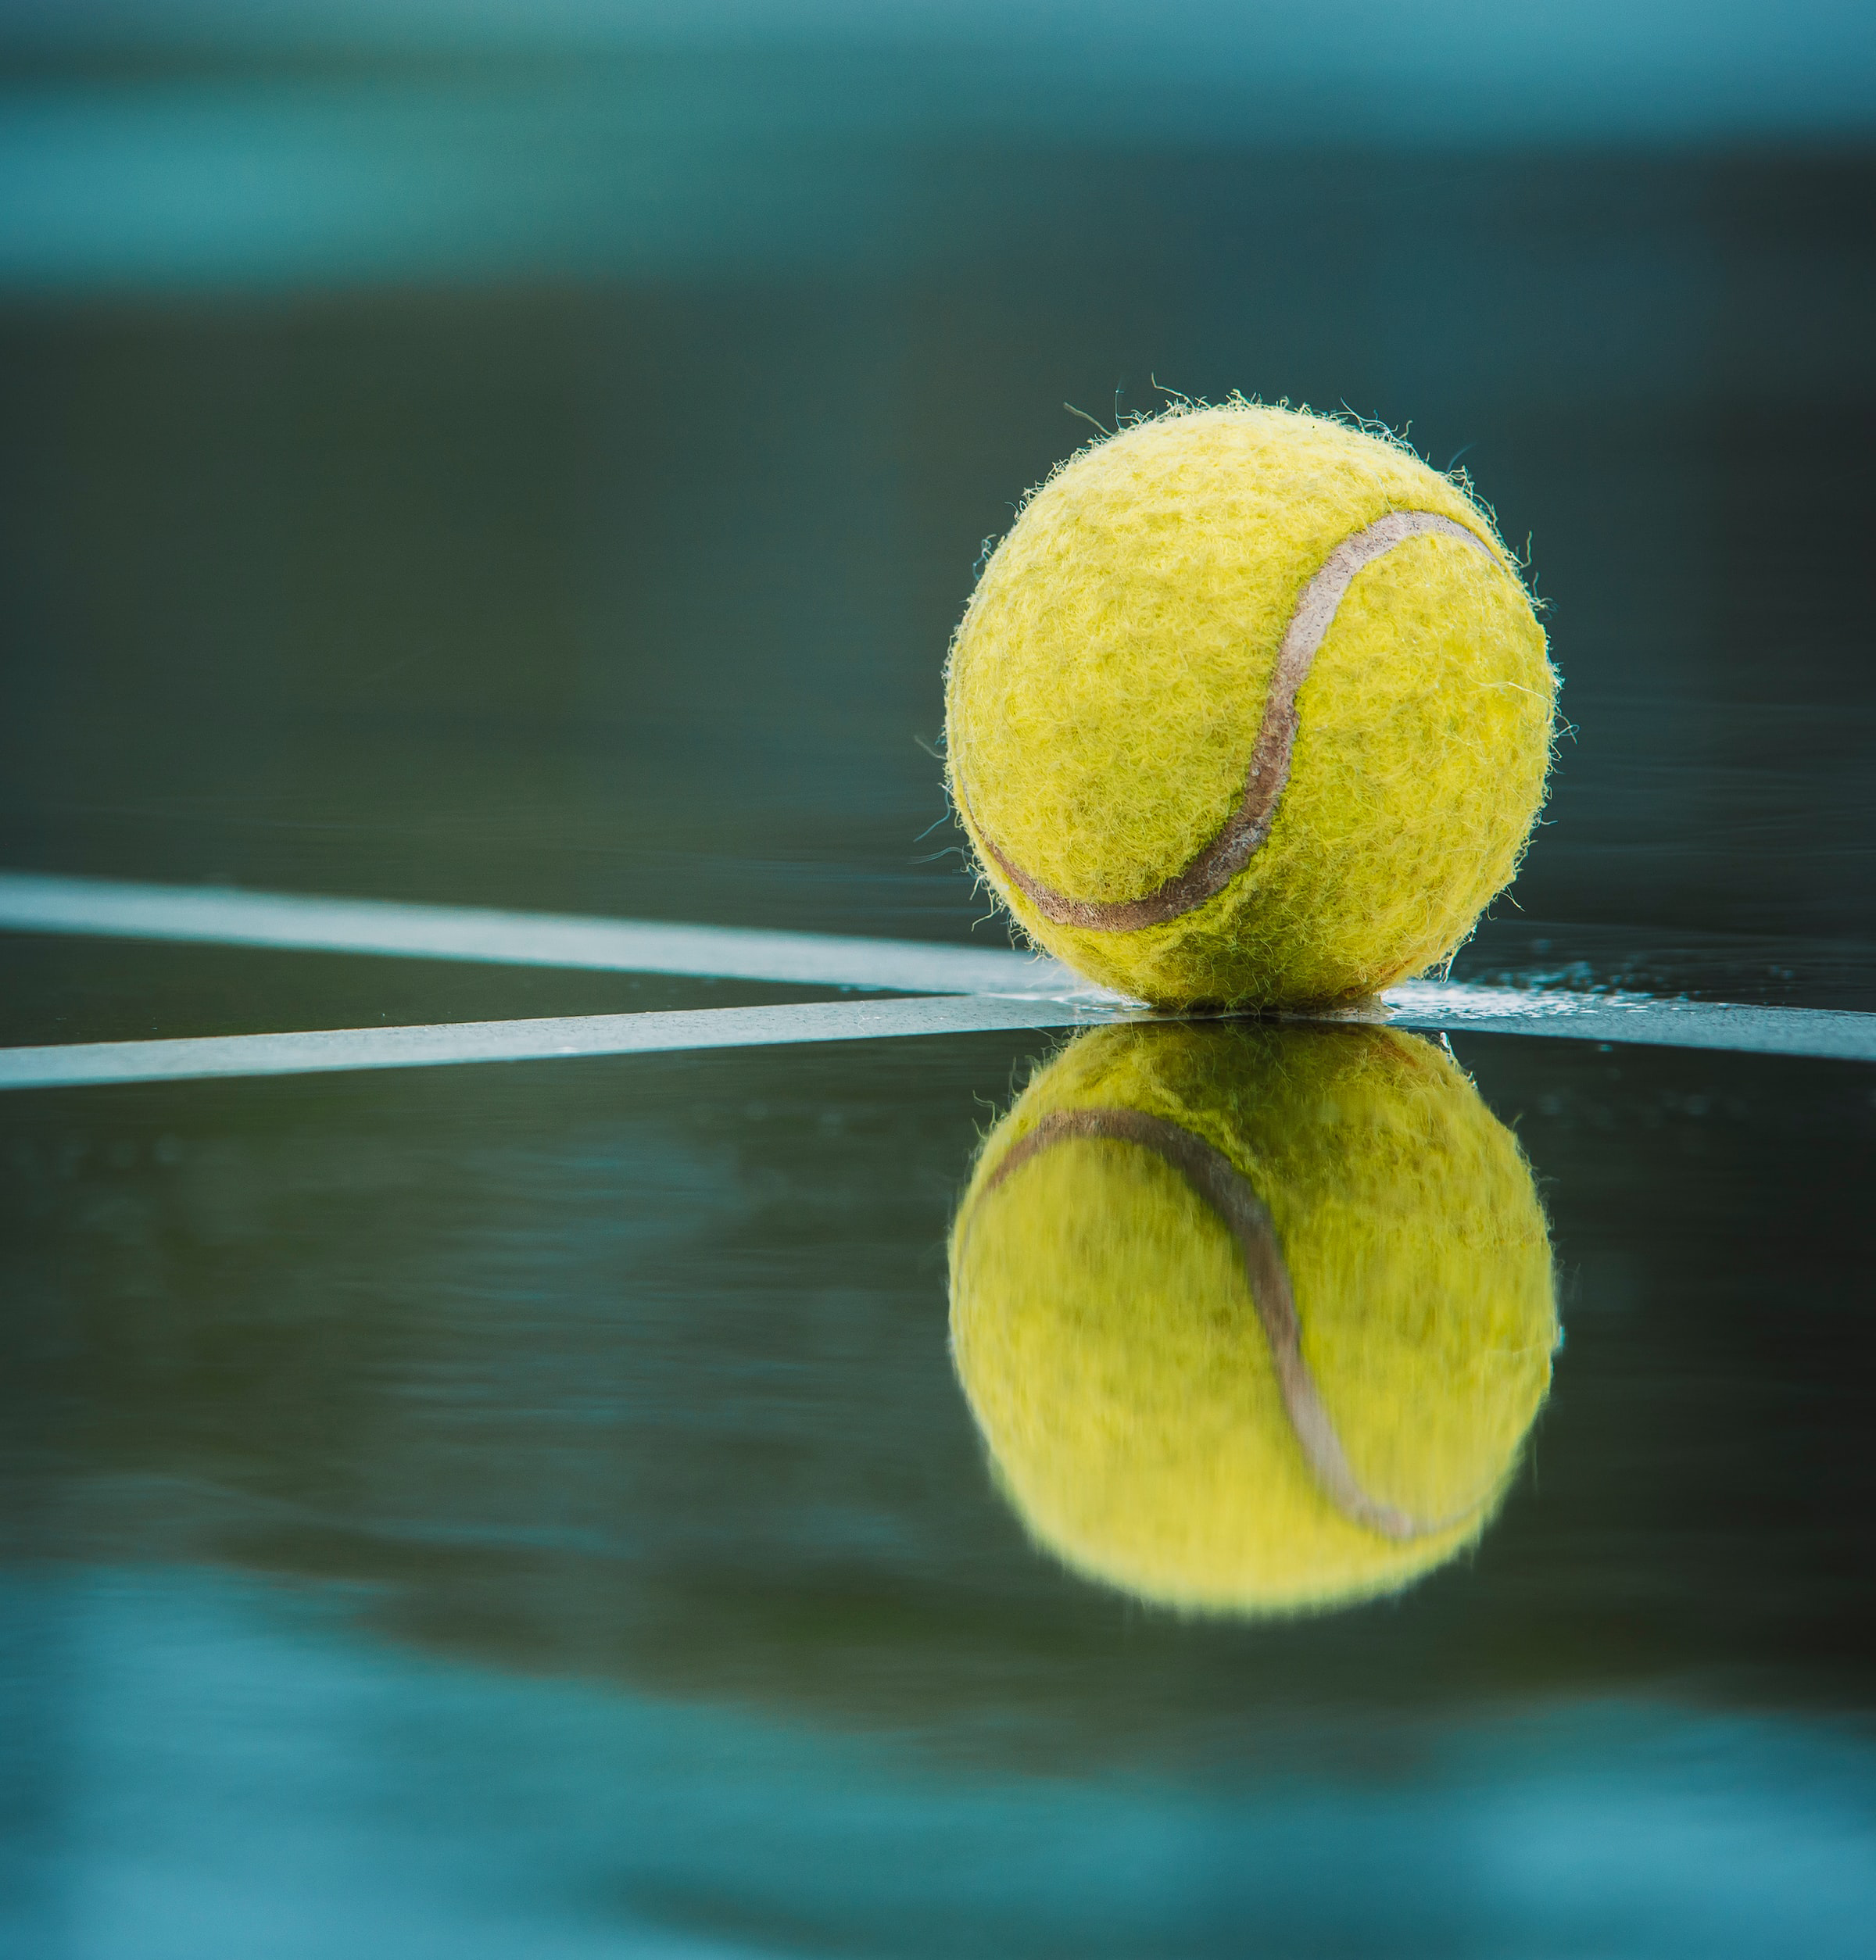 Photo of a tennis ball